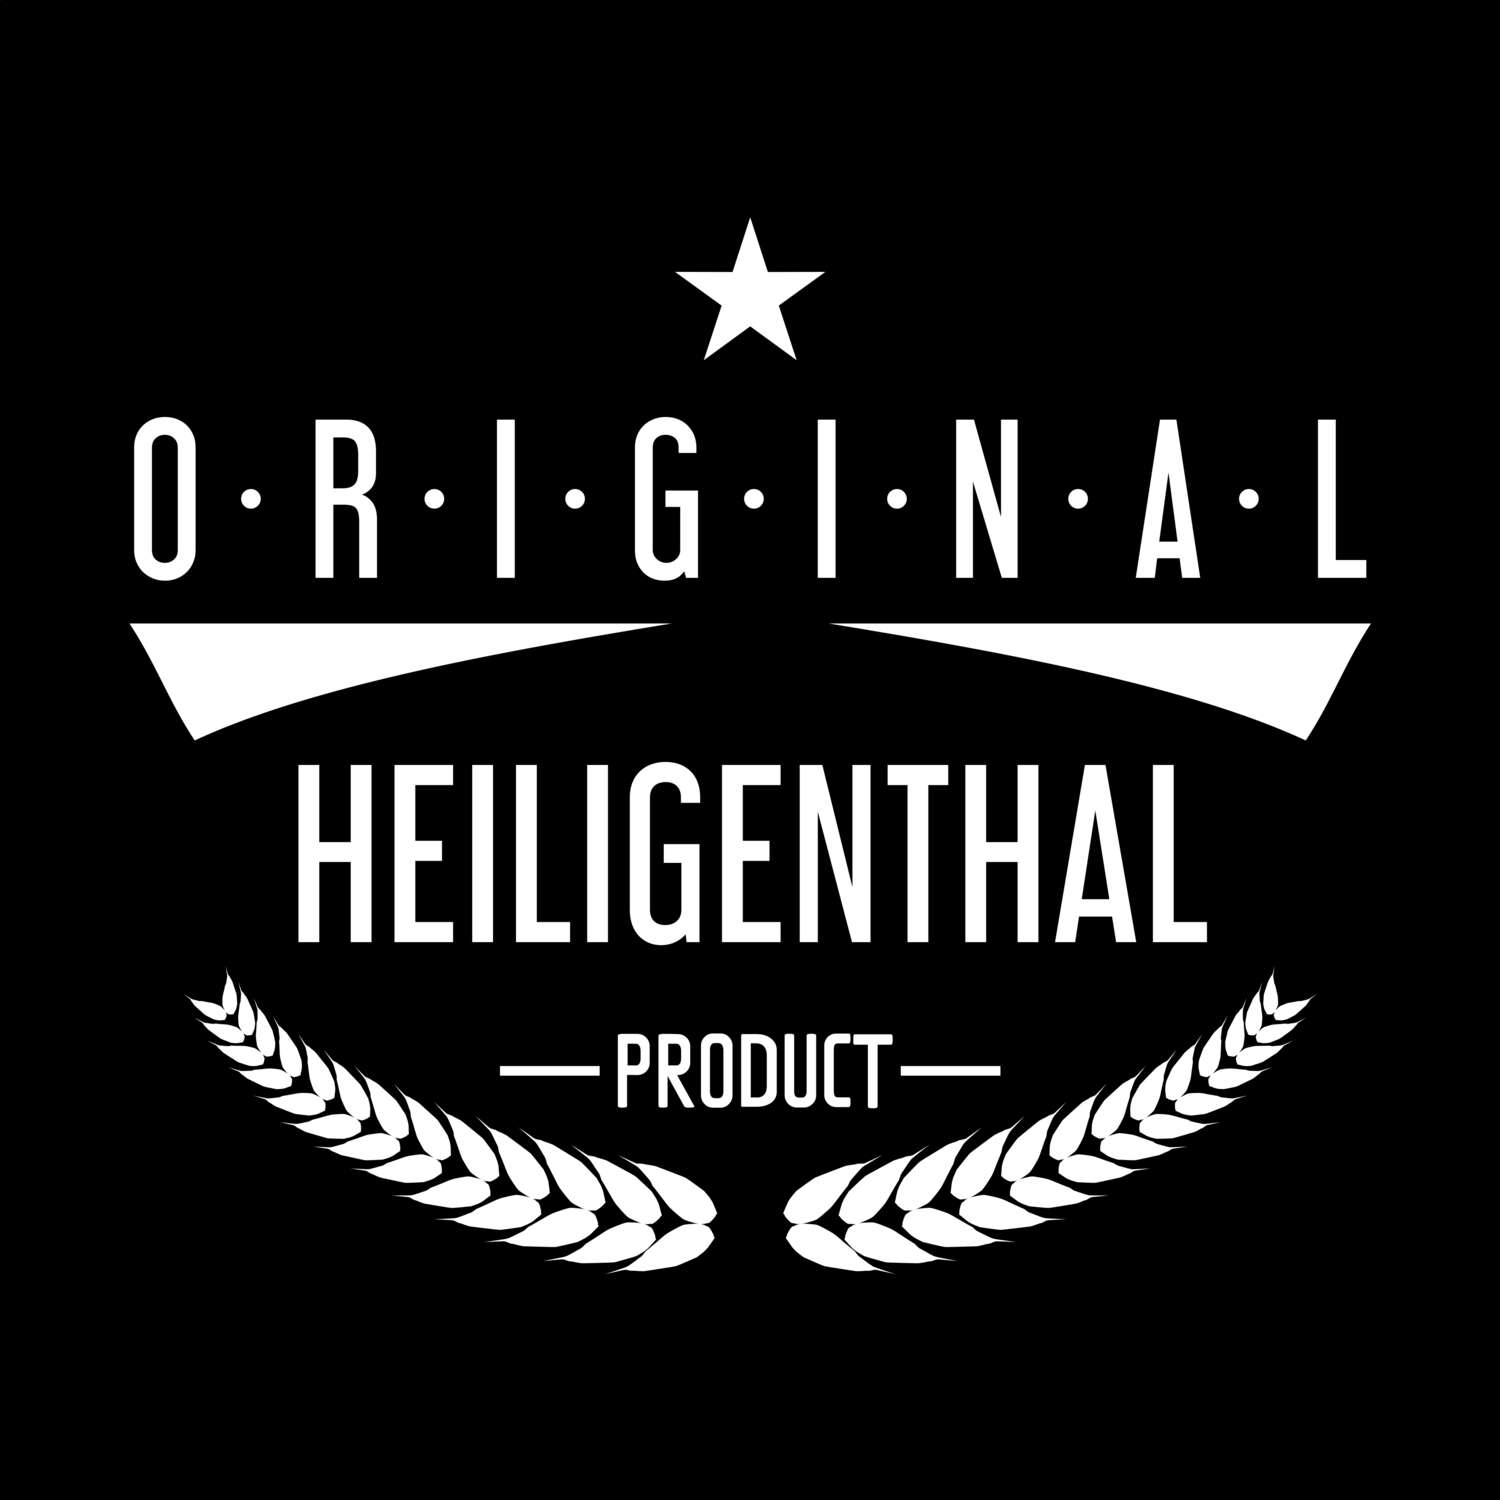 Heiligenthal T-Shirt »Original Product«